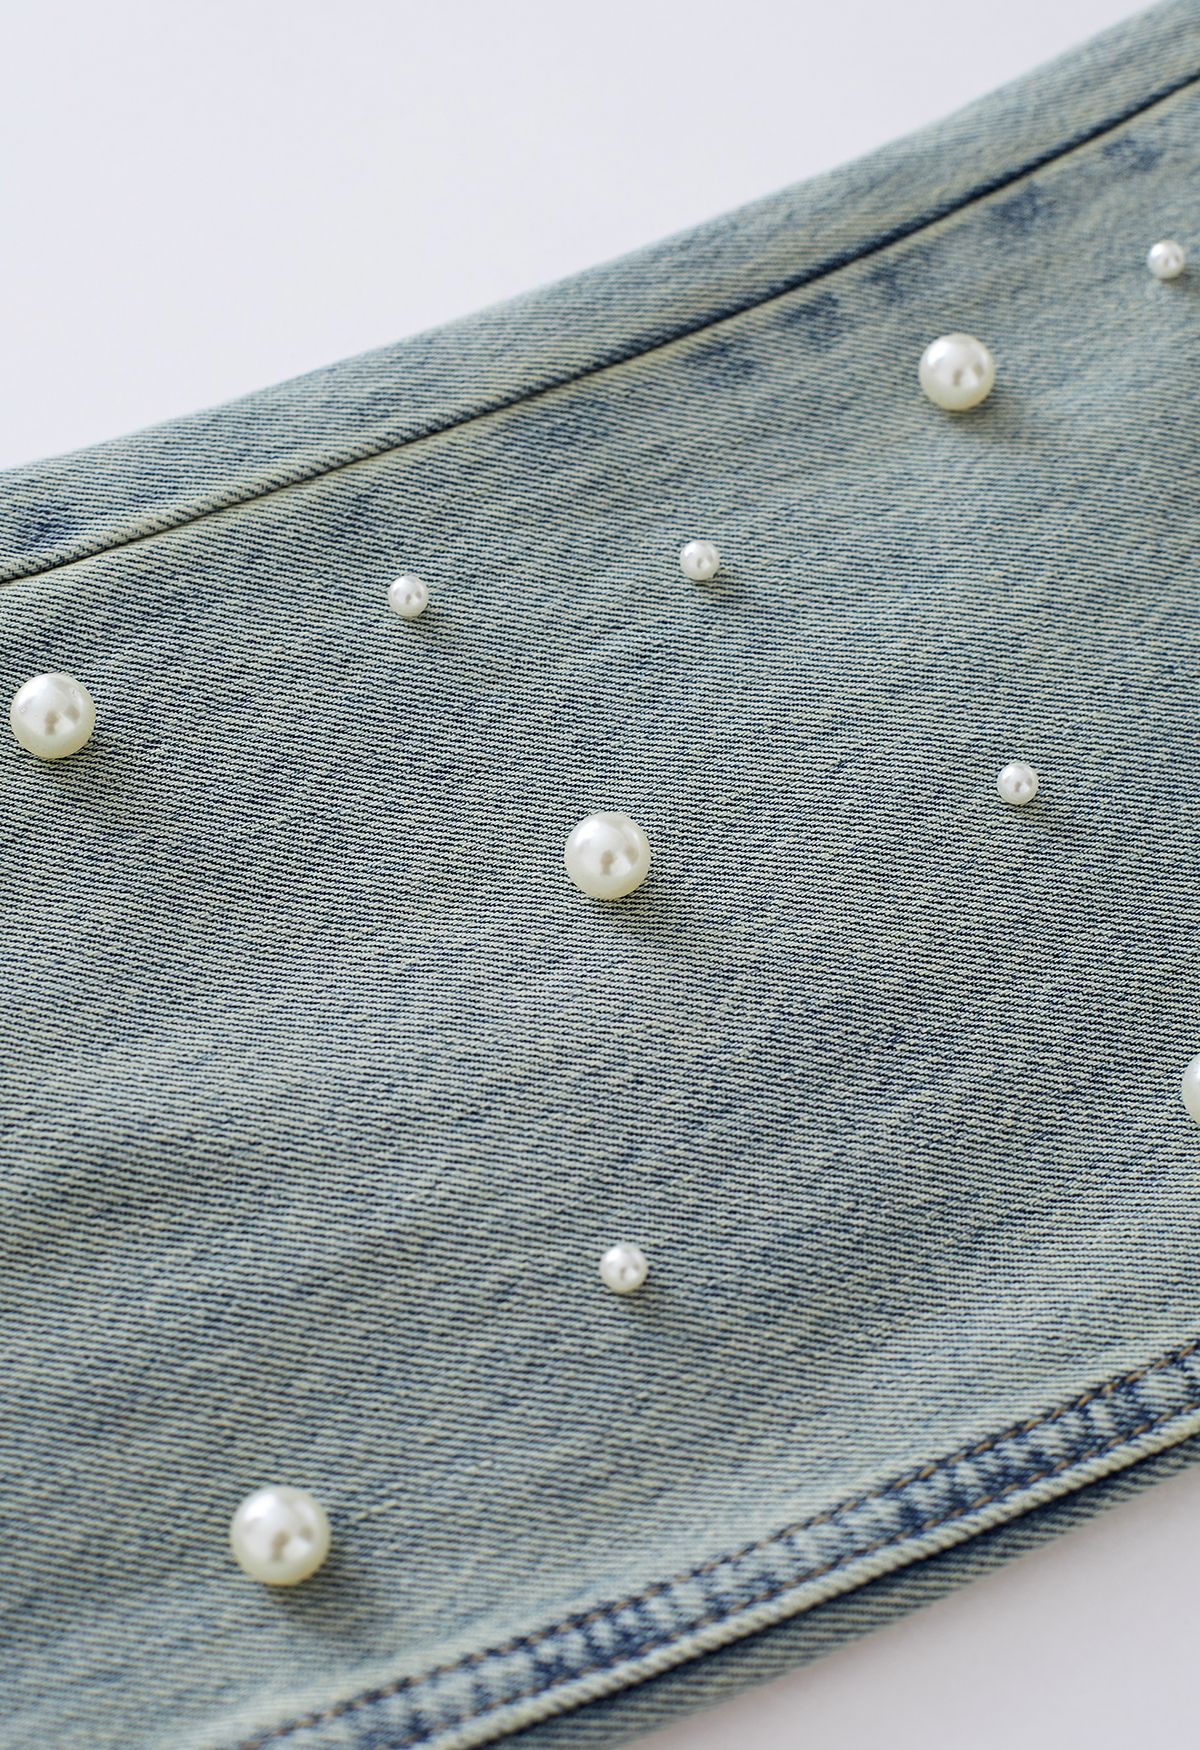 Retro Pearl Embellish Flare Jeans